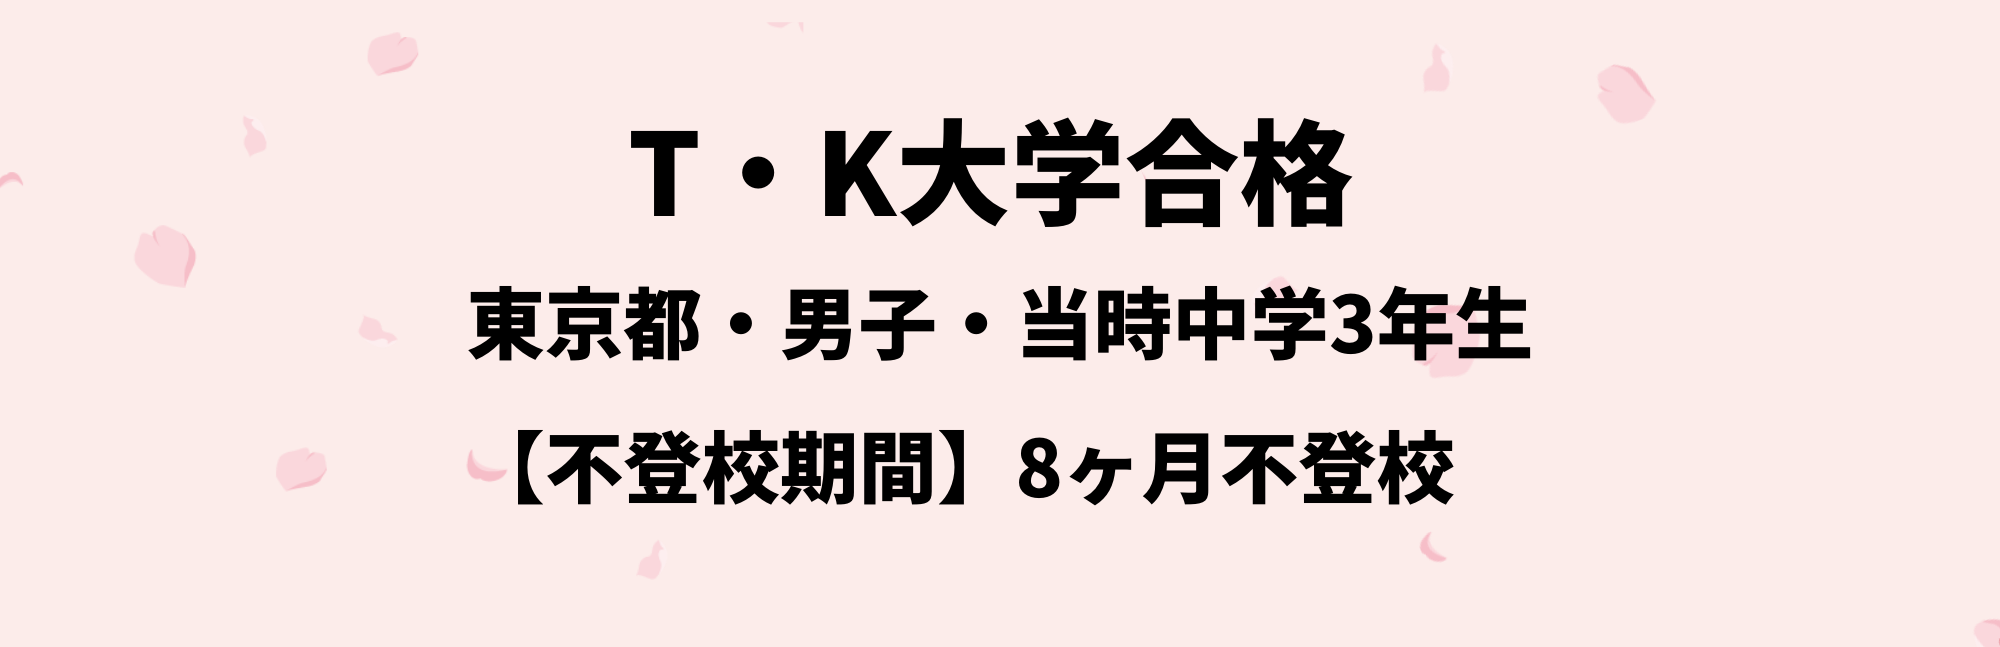 T・K大学合格
東京都・男子・当時中学3年生
不登校期間：8ヶ月不登校